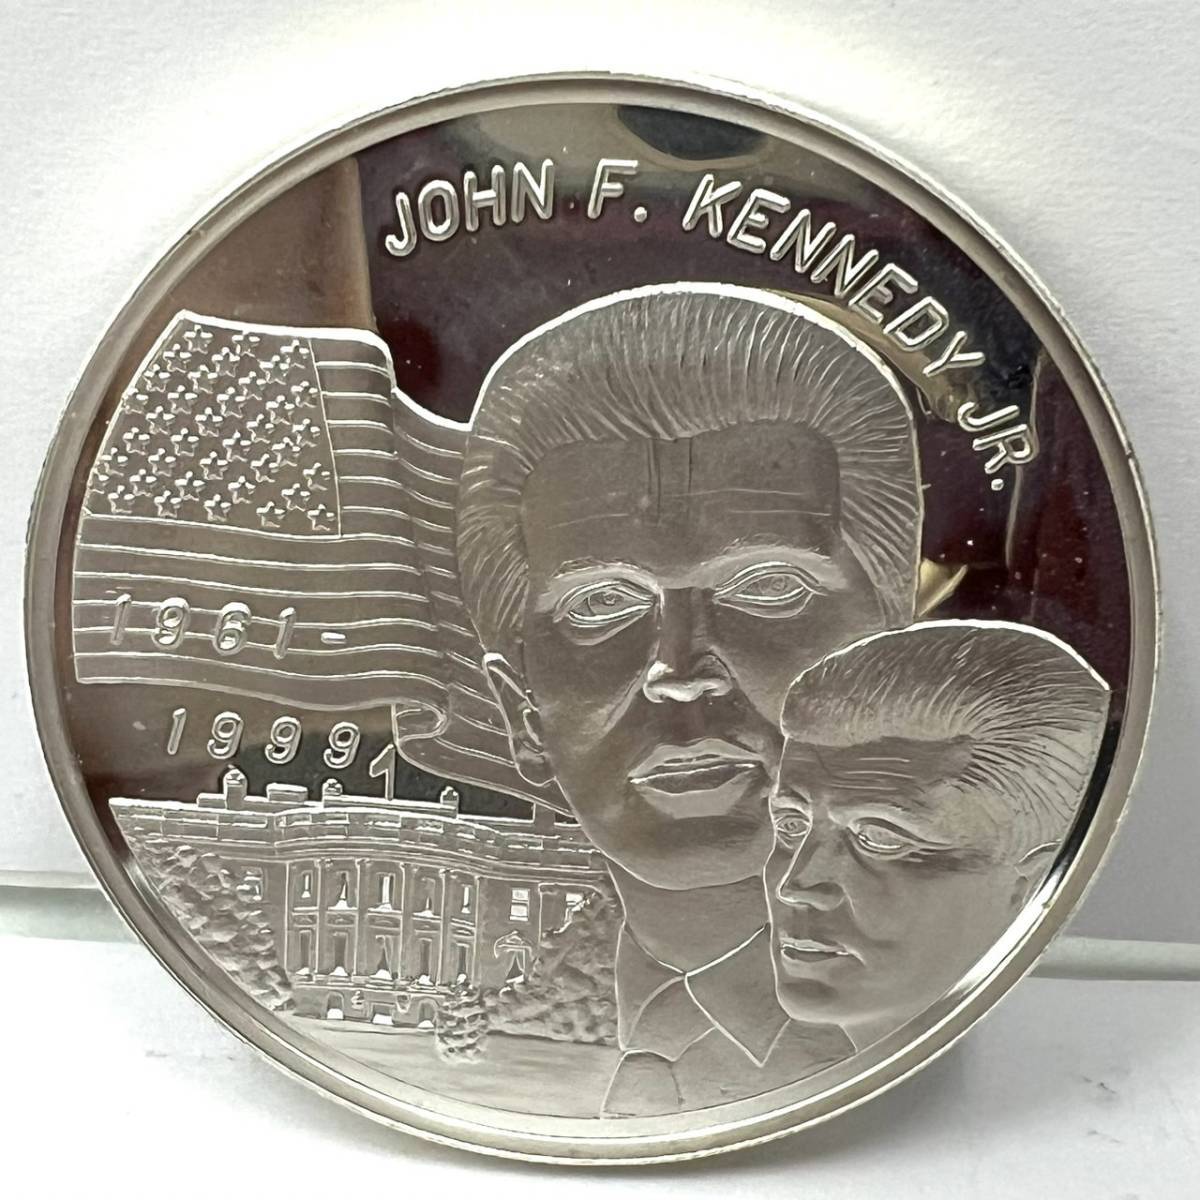 【K】銀貨おまとめ3点セット 2005年アメリカ/1993年エジプト/1999年リベリア 外国硬貨 SV999 記念銀貨 コレクション 世界【2667】_画像6